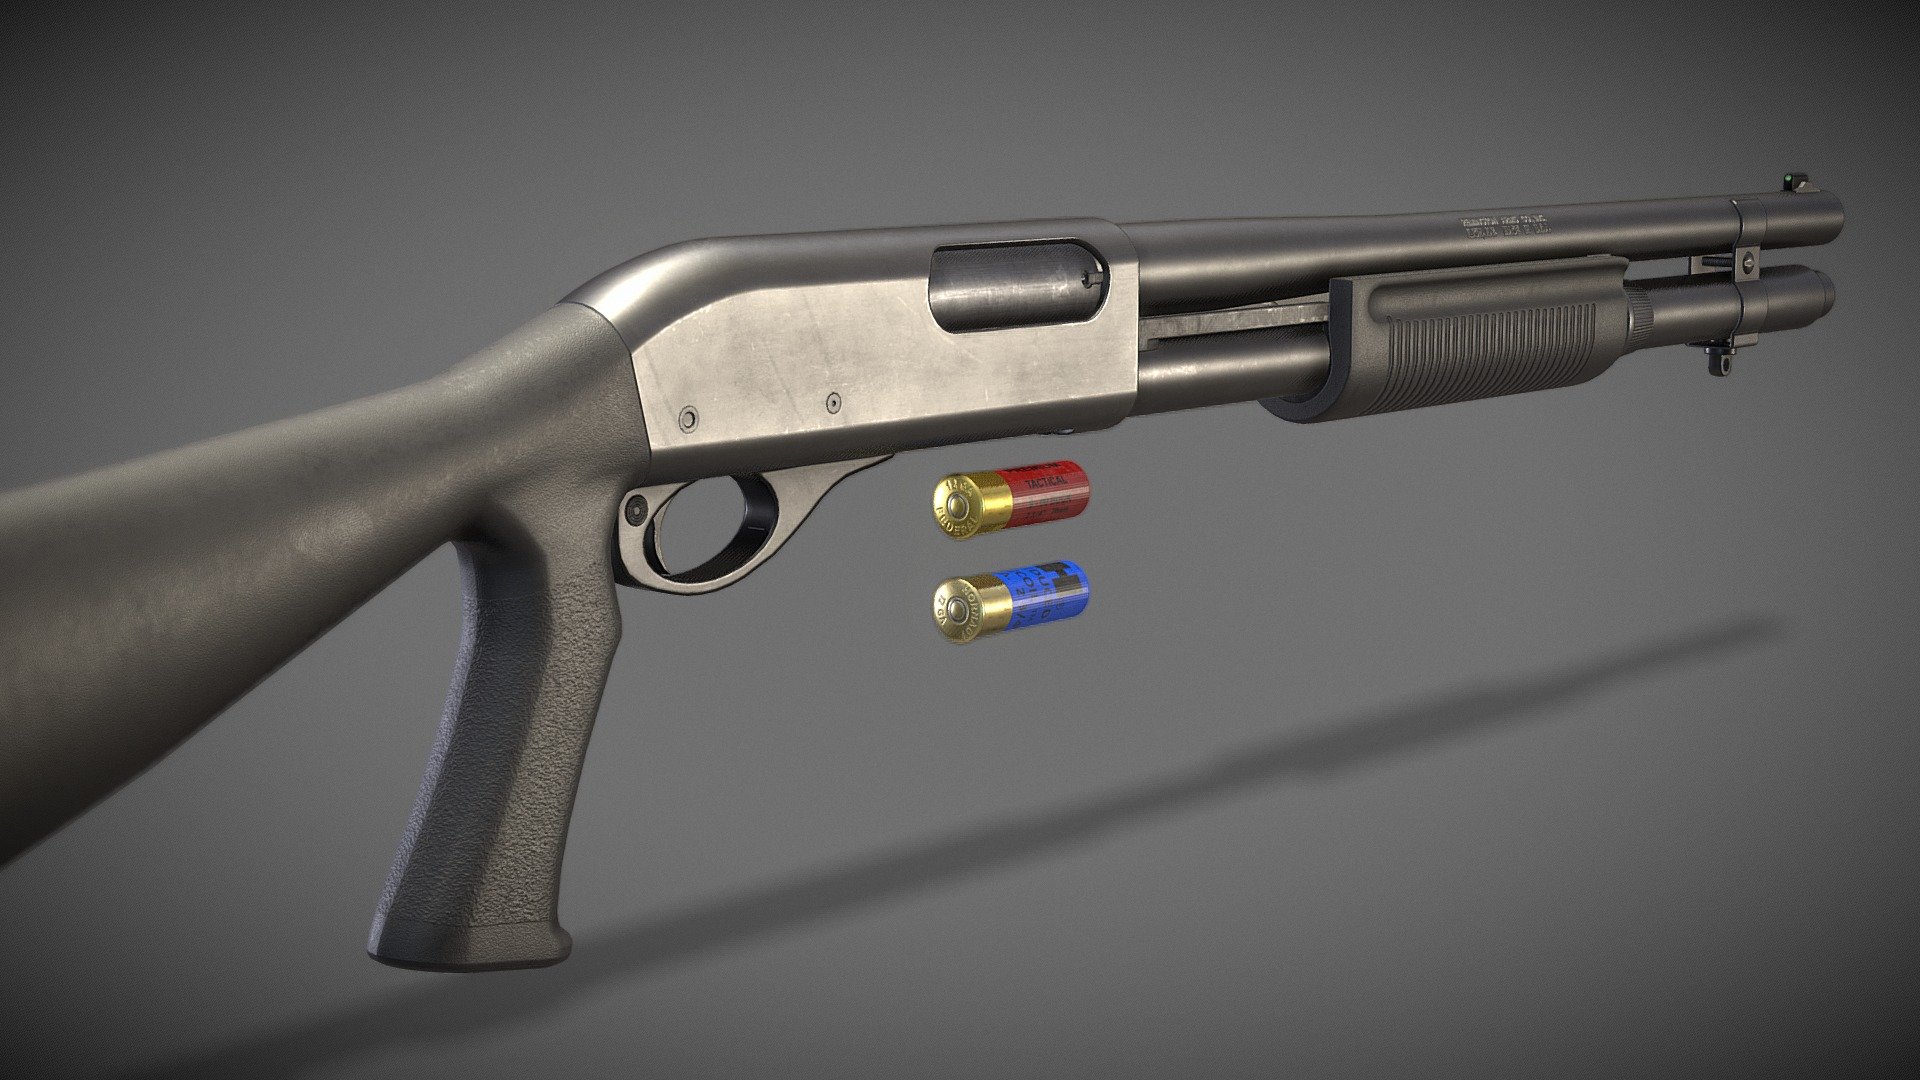 Gun Planet  Remington 870 Police Express Magnum cal 12